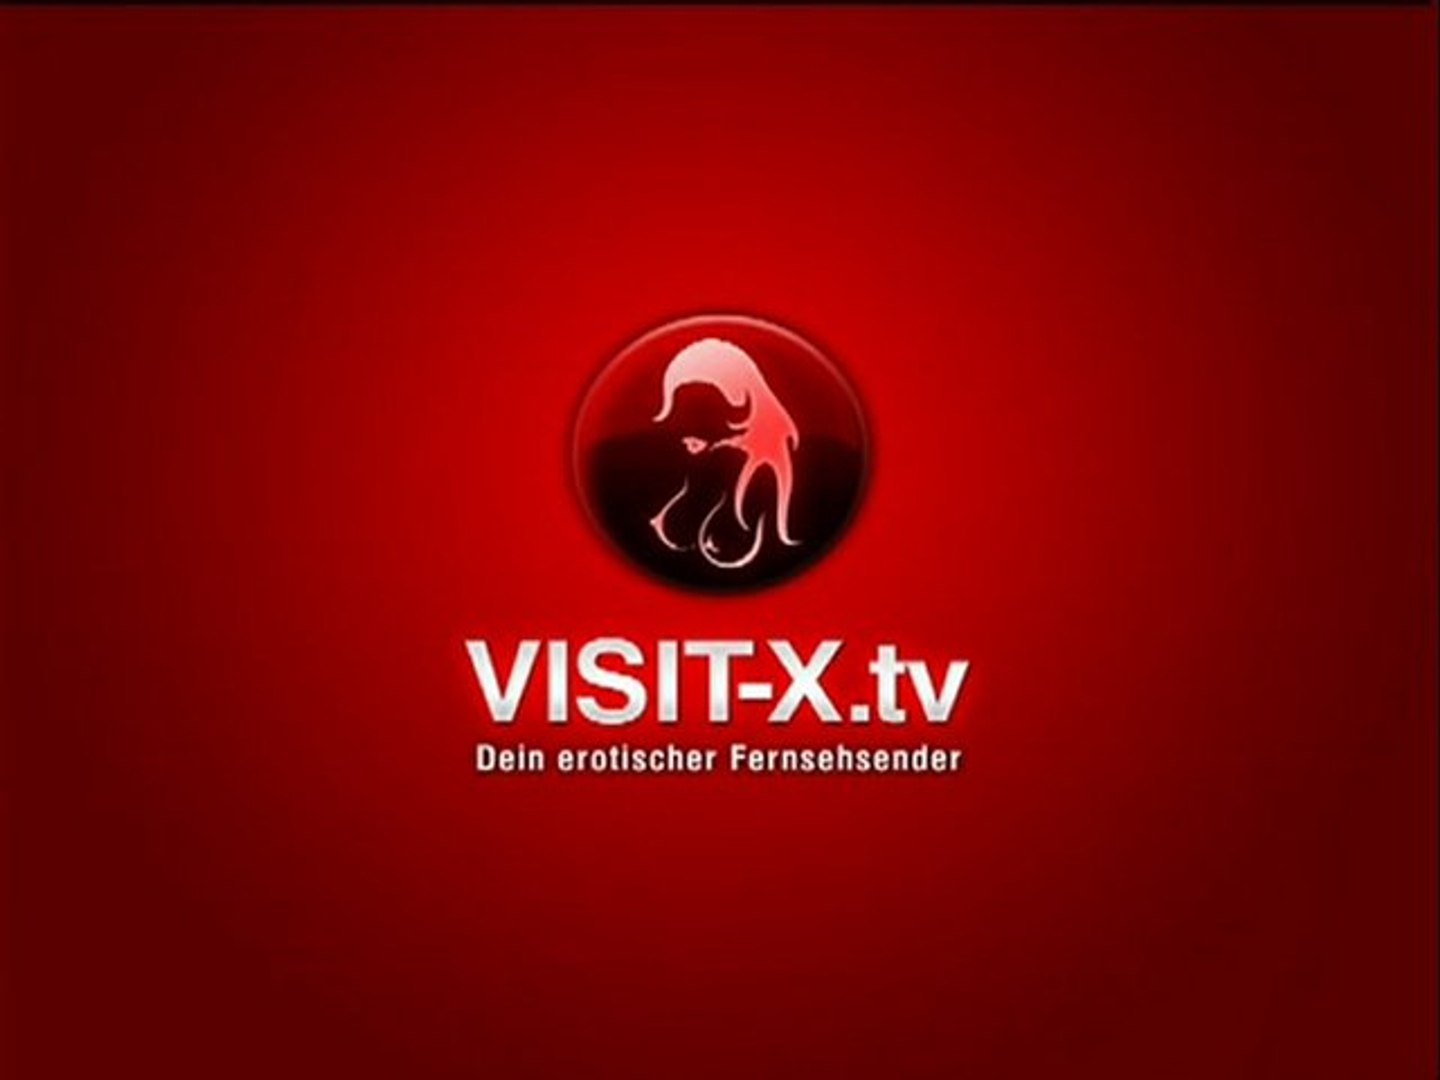 X-tv visit VISIT X